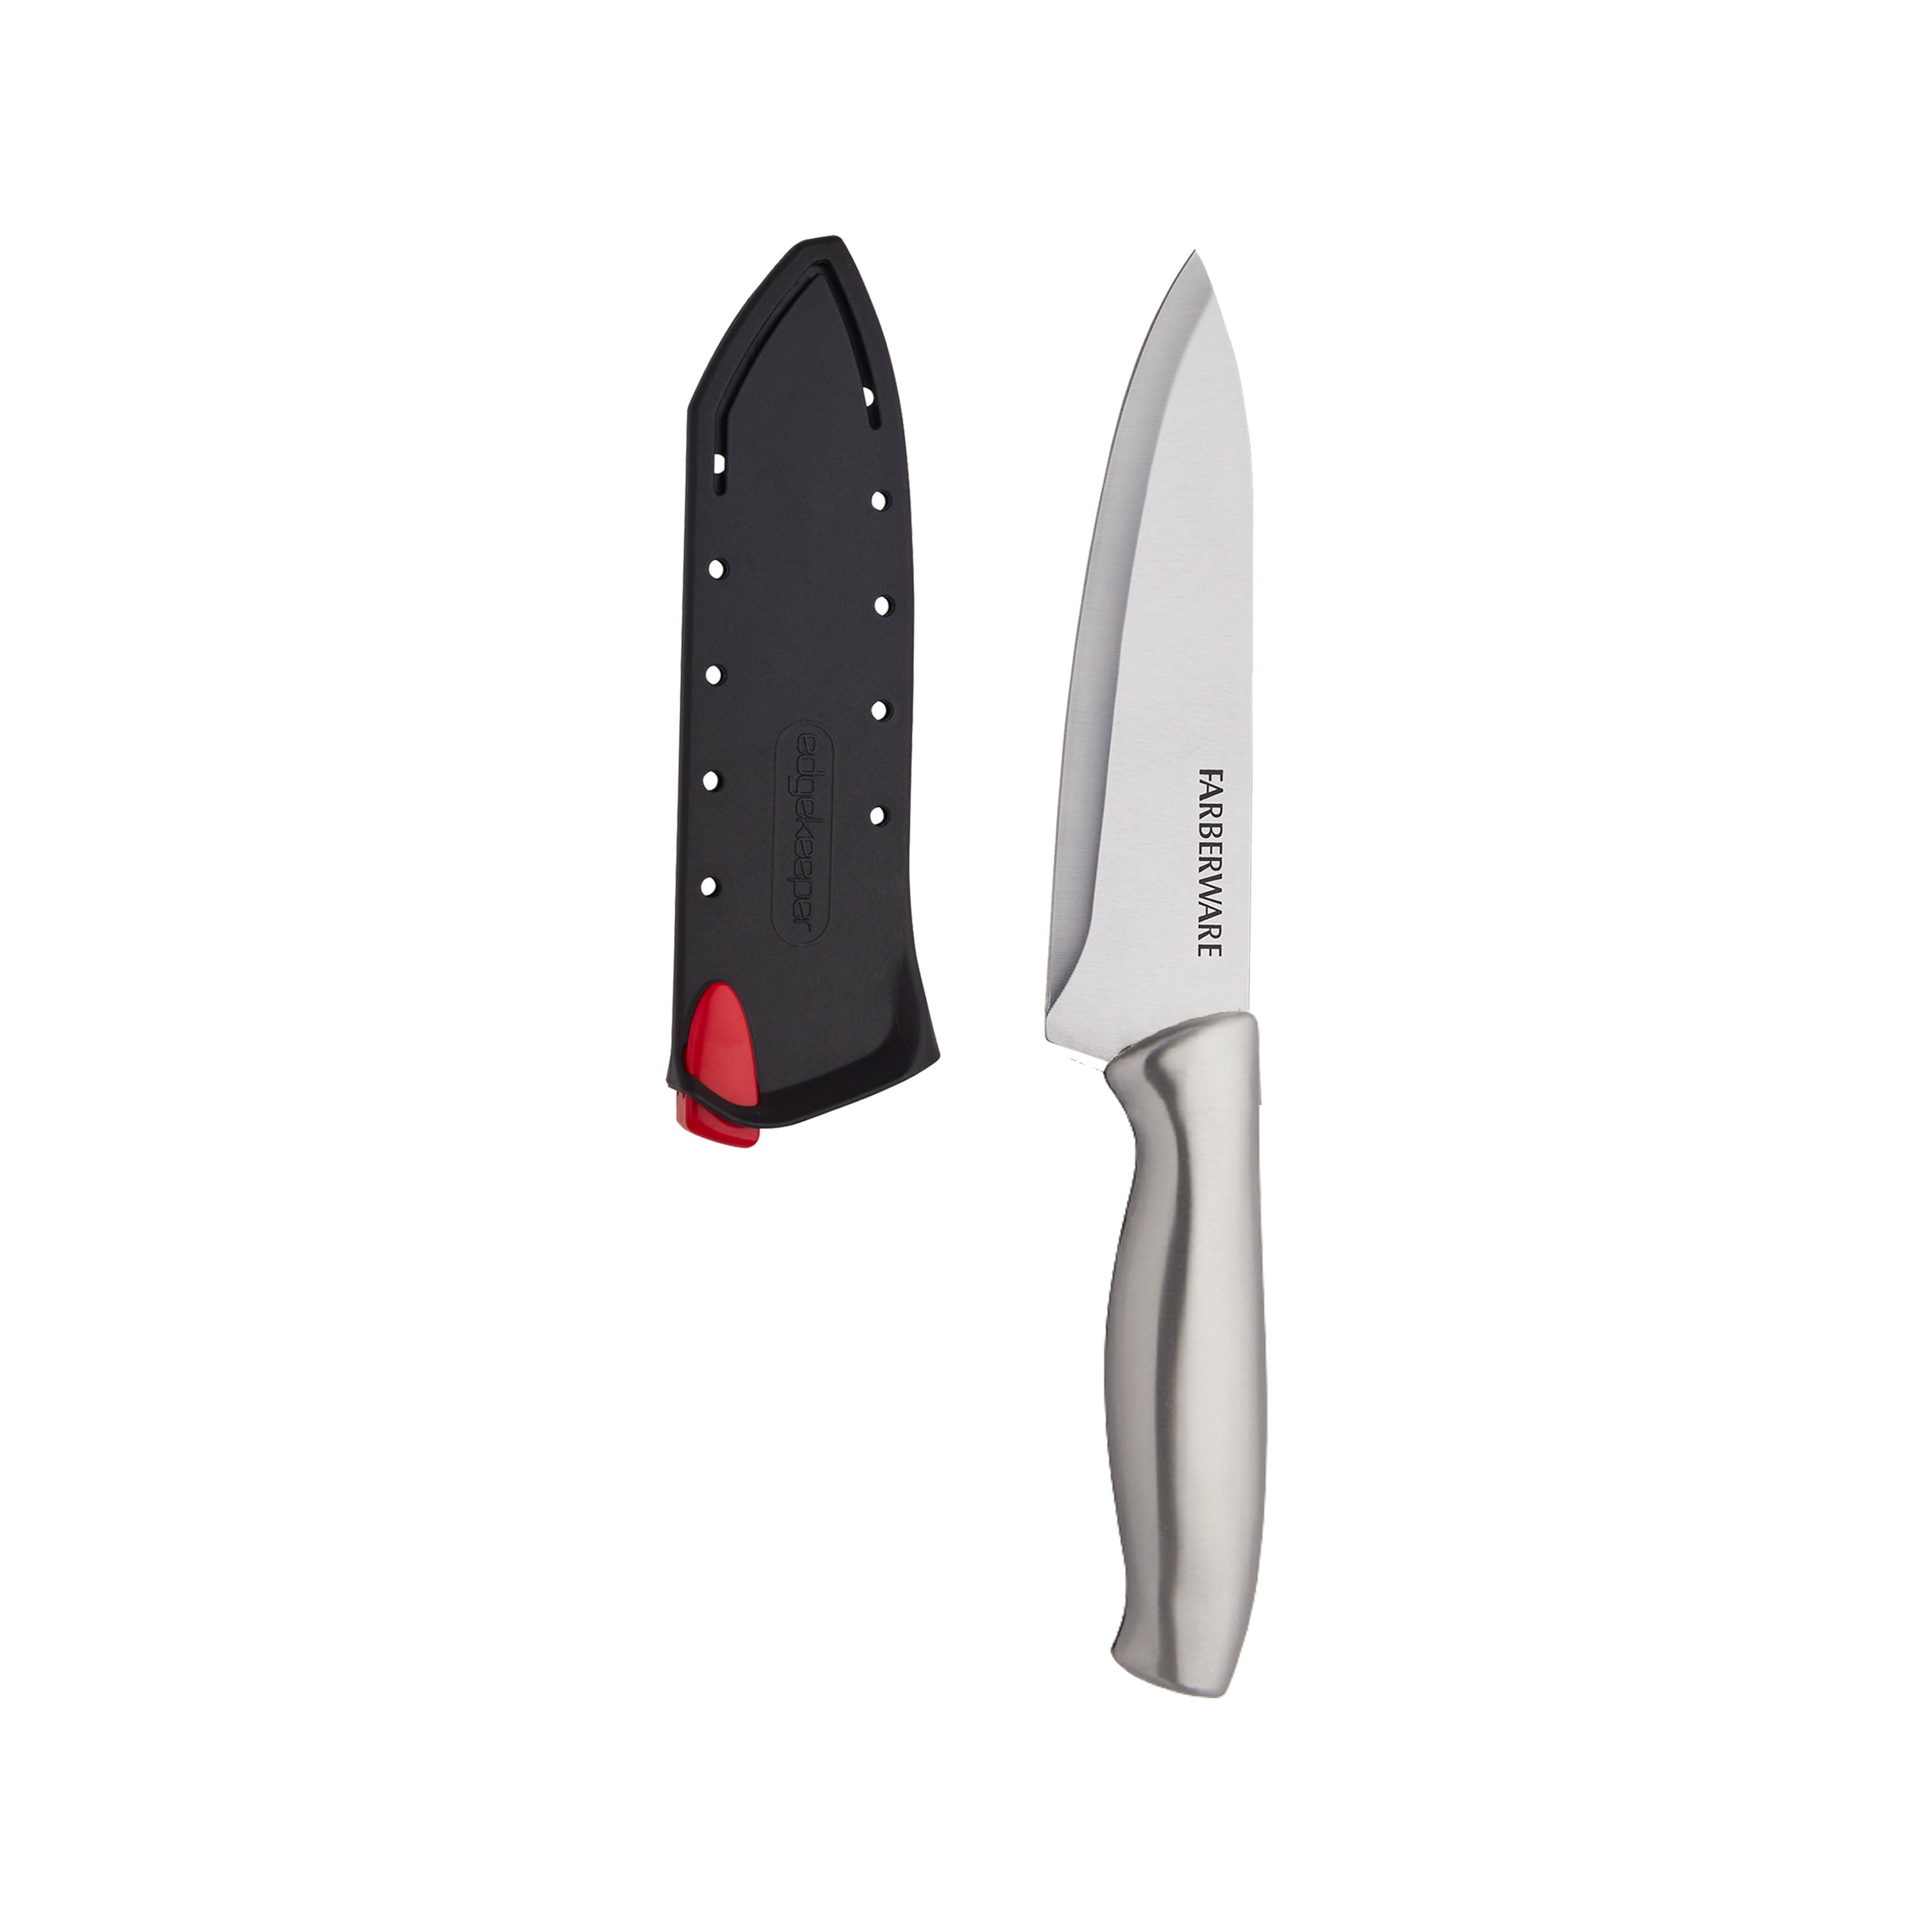 Farberware Professional 6-inch Ceramic Kitchen Chef Knife in Red